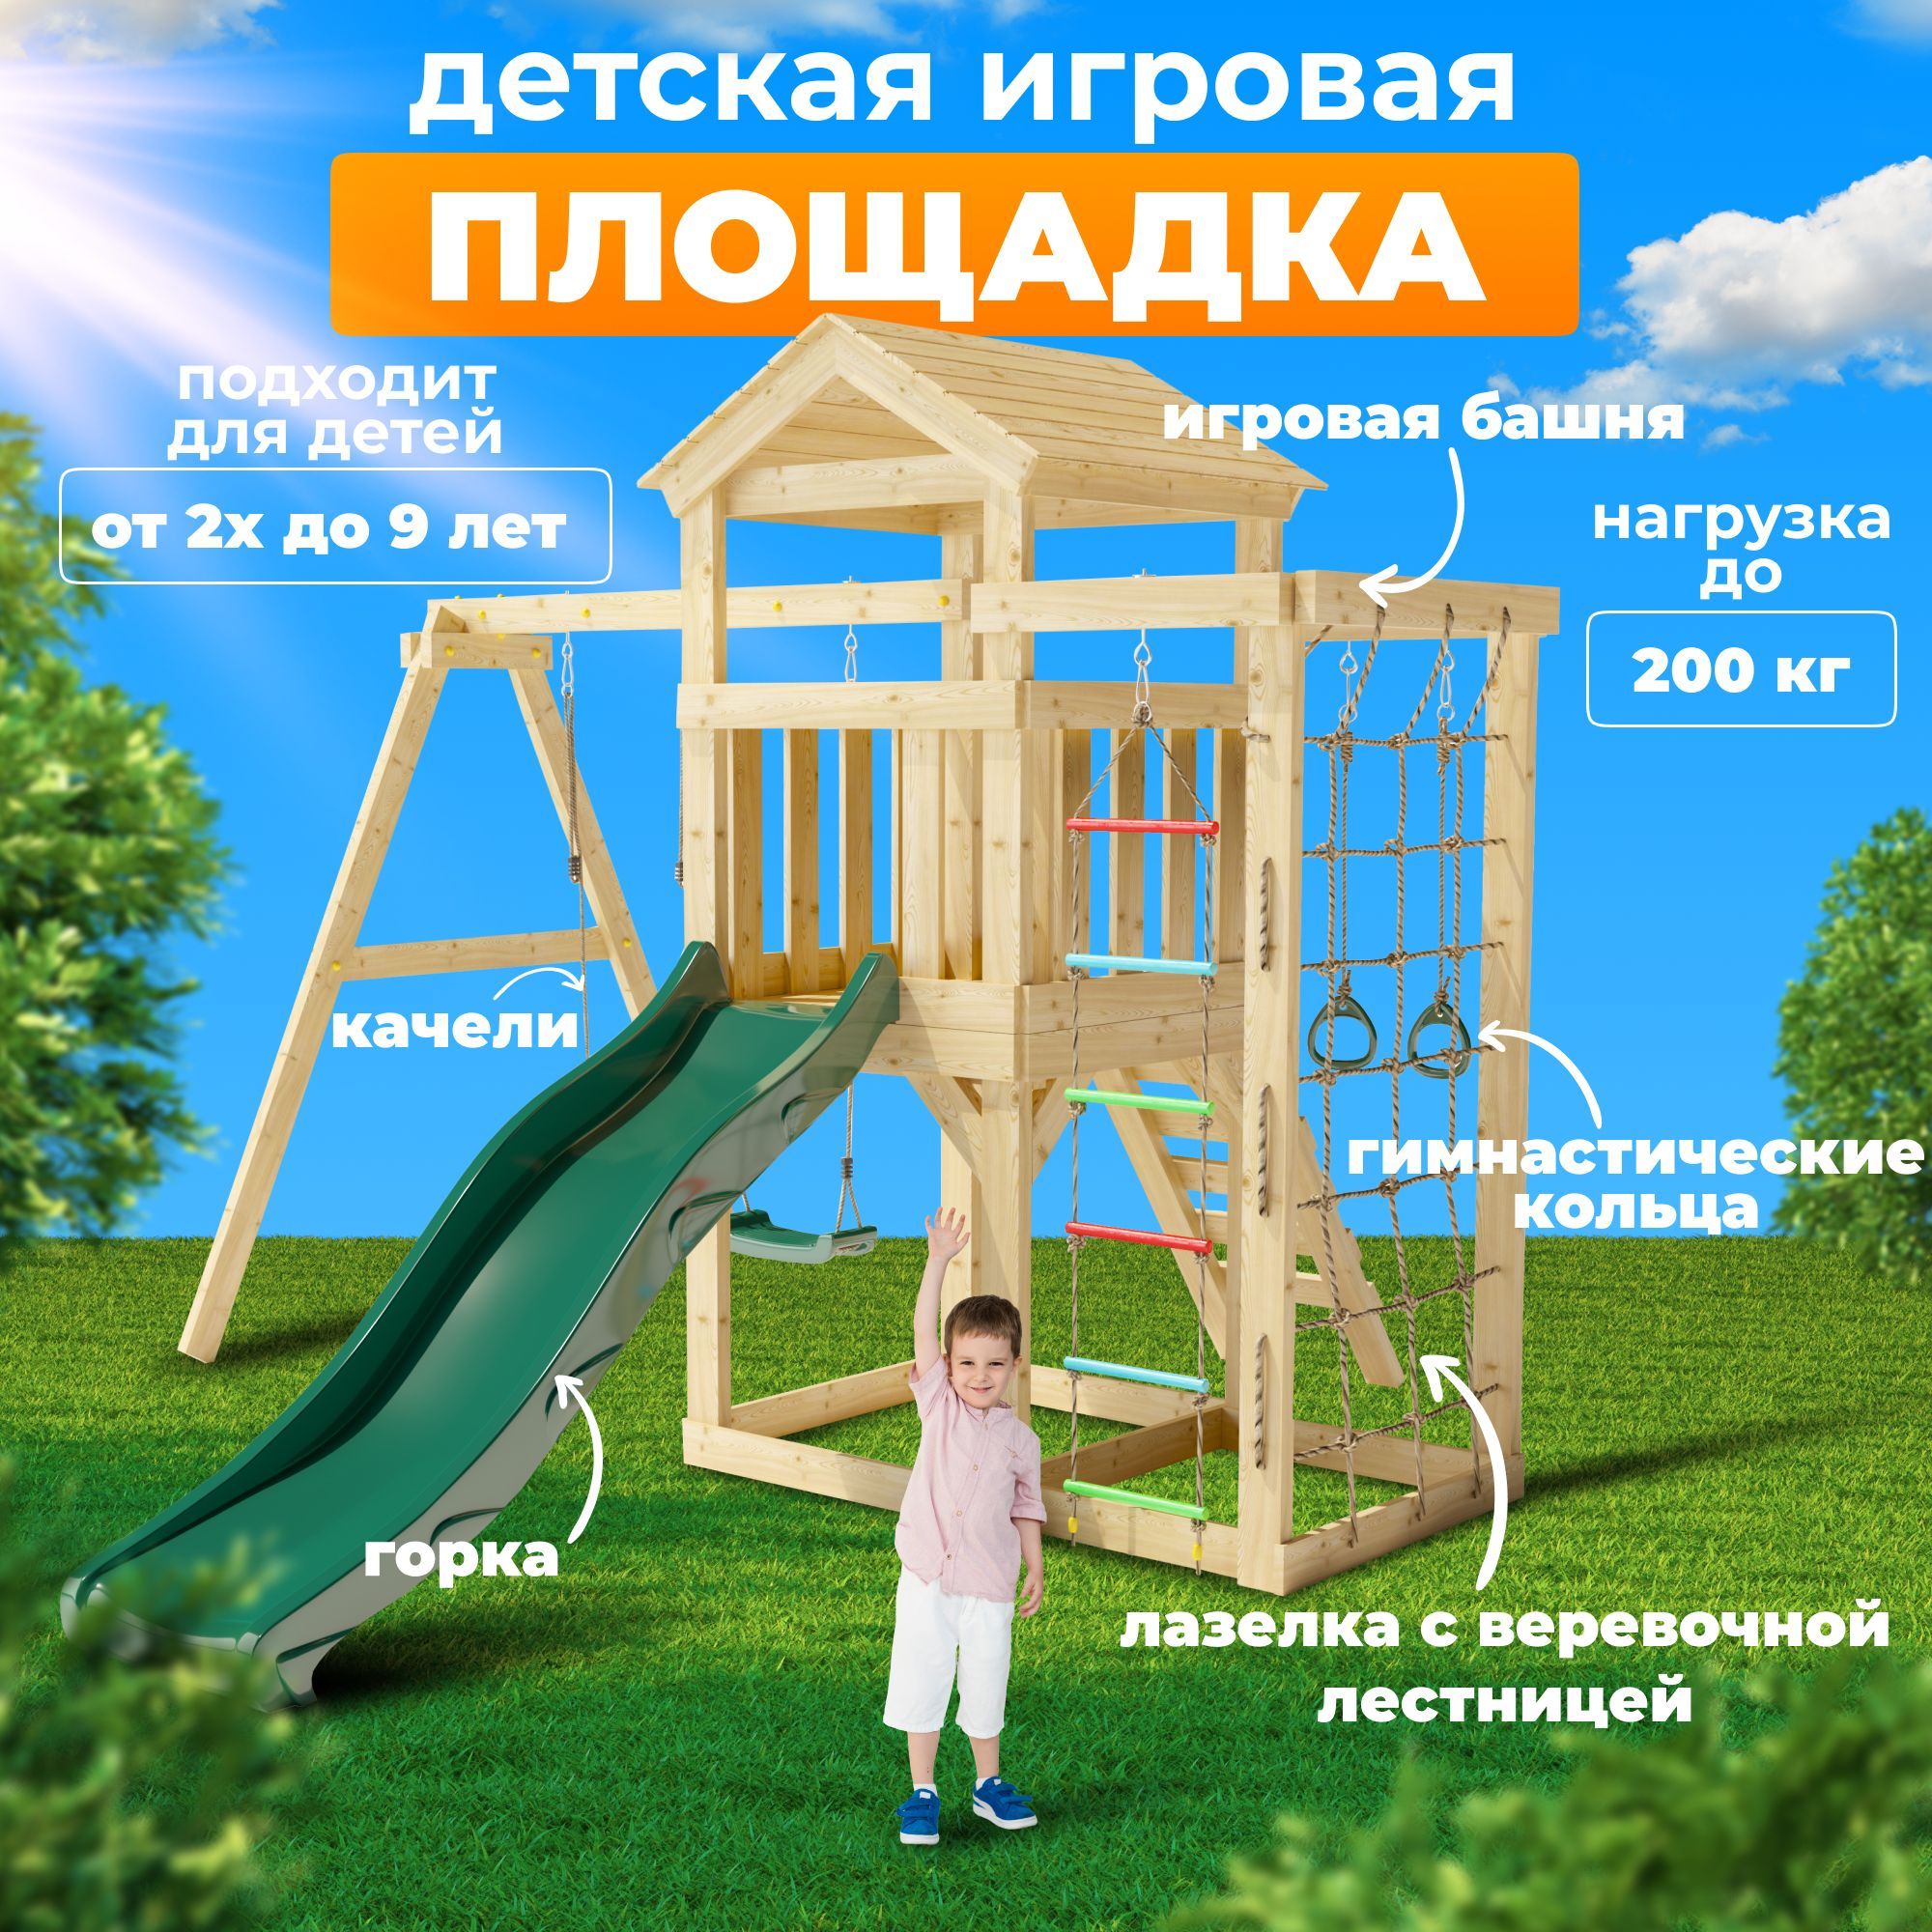 Обустройство детской площадки на даче